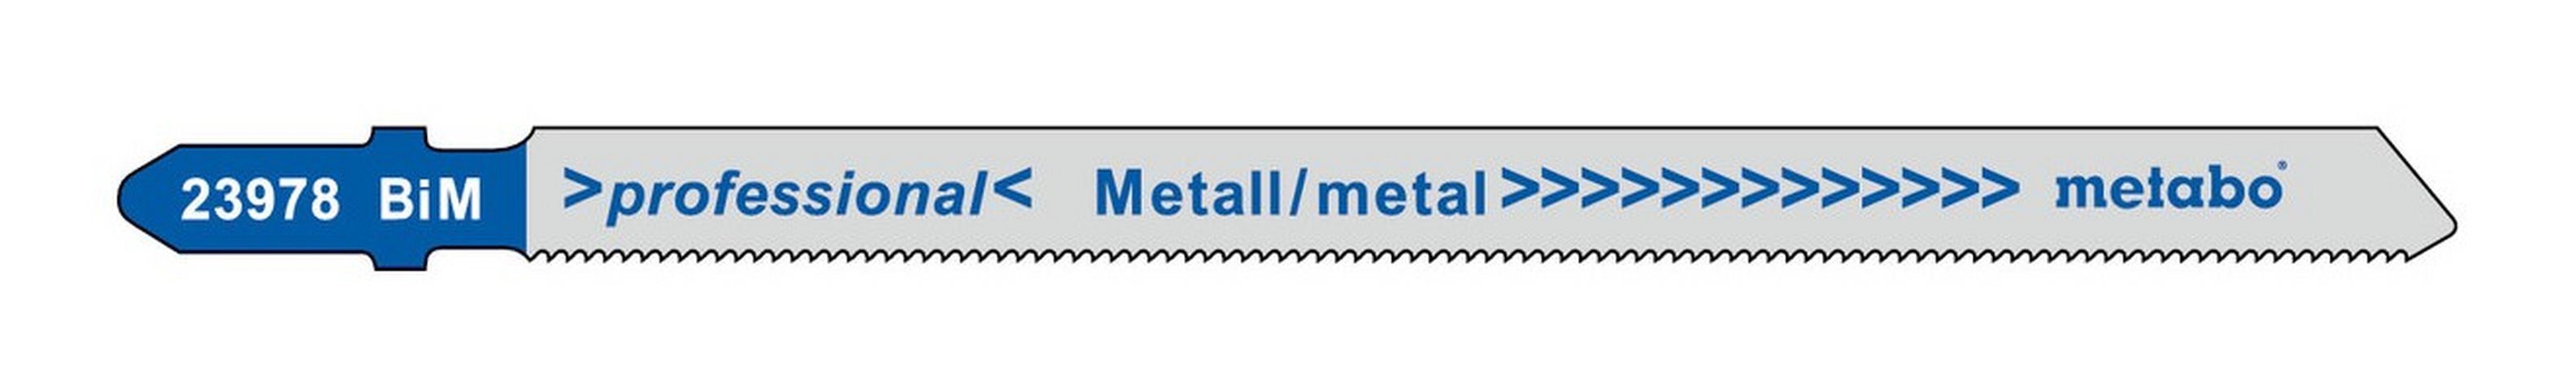 metabo Stichsägeblatt Metall (5 1,1 106 Serie BiM professional Stück), mm / Stichsägeblätter